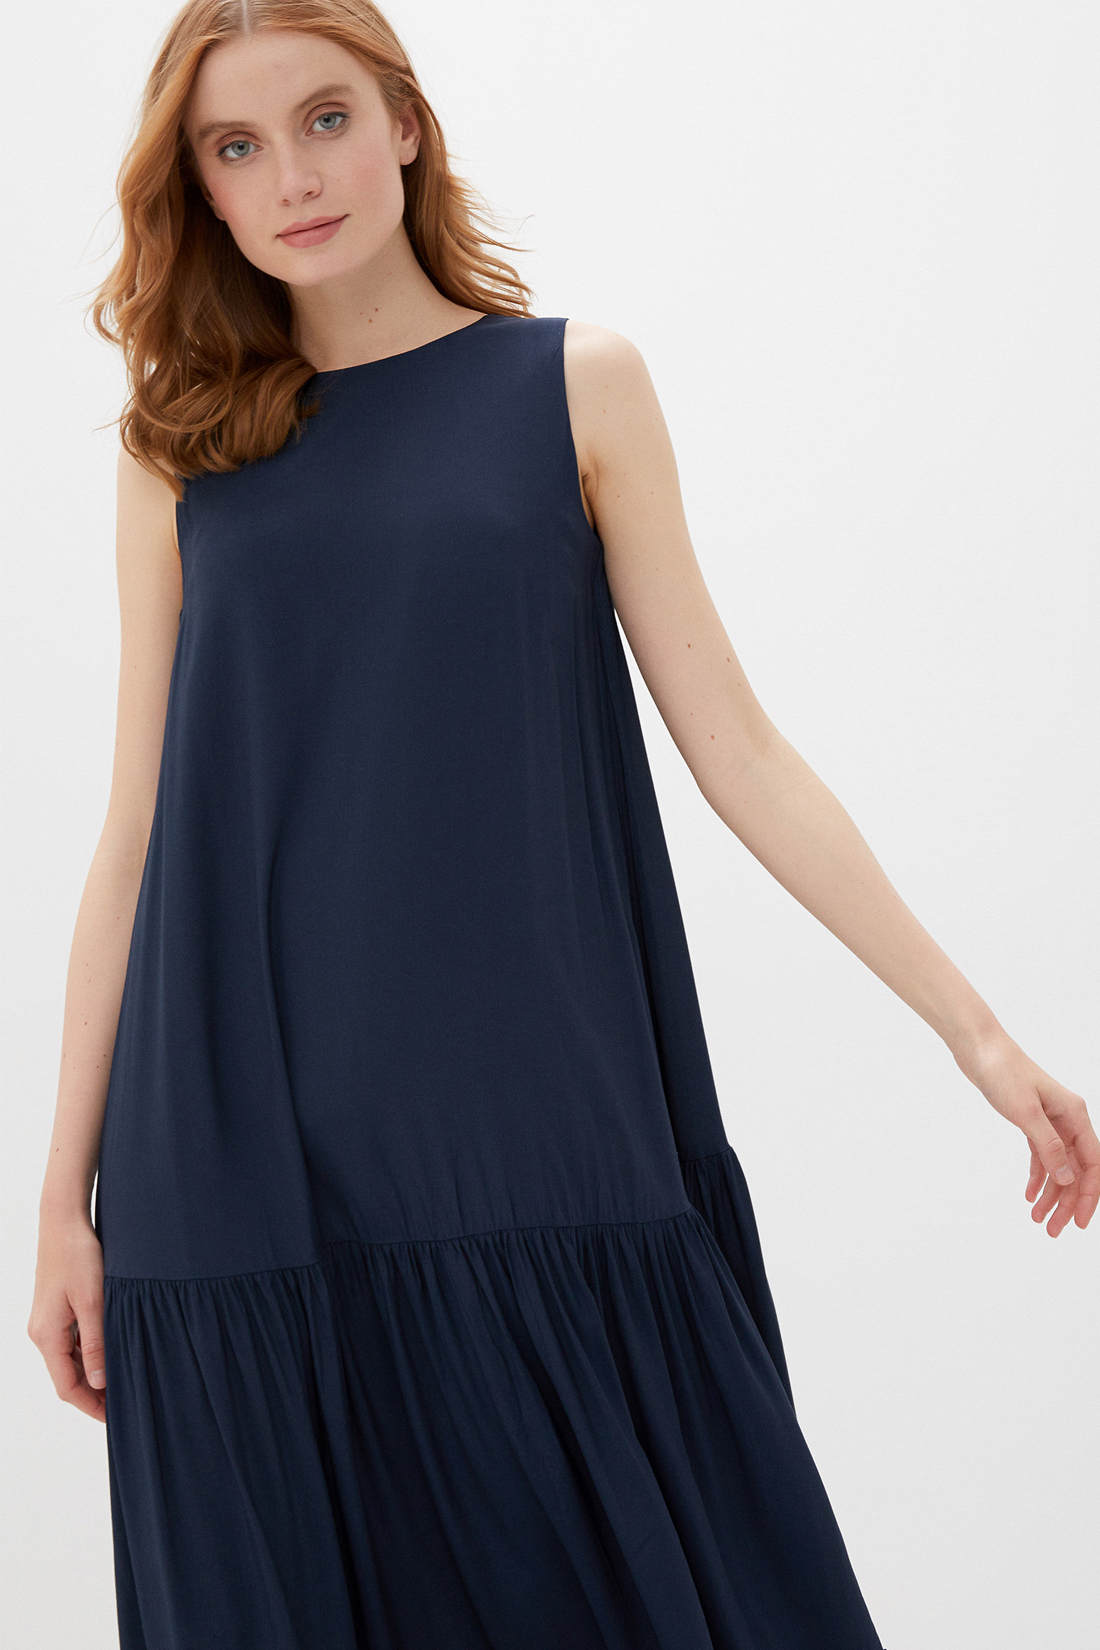 Платье (арт. baon B450094), размер M, цвет синий Платье (арт. baon B450094) - фото 4